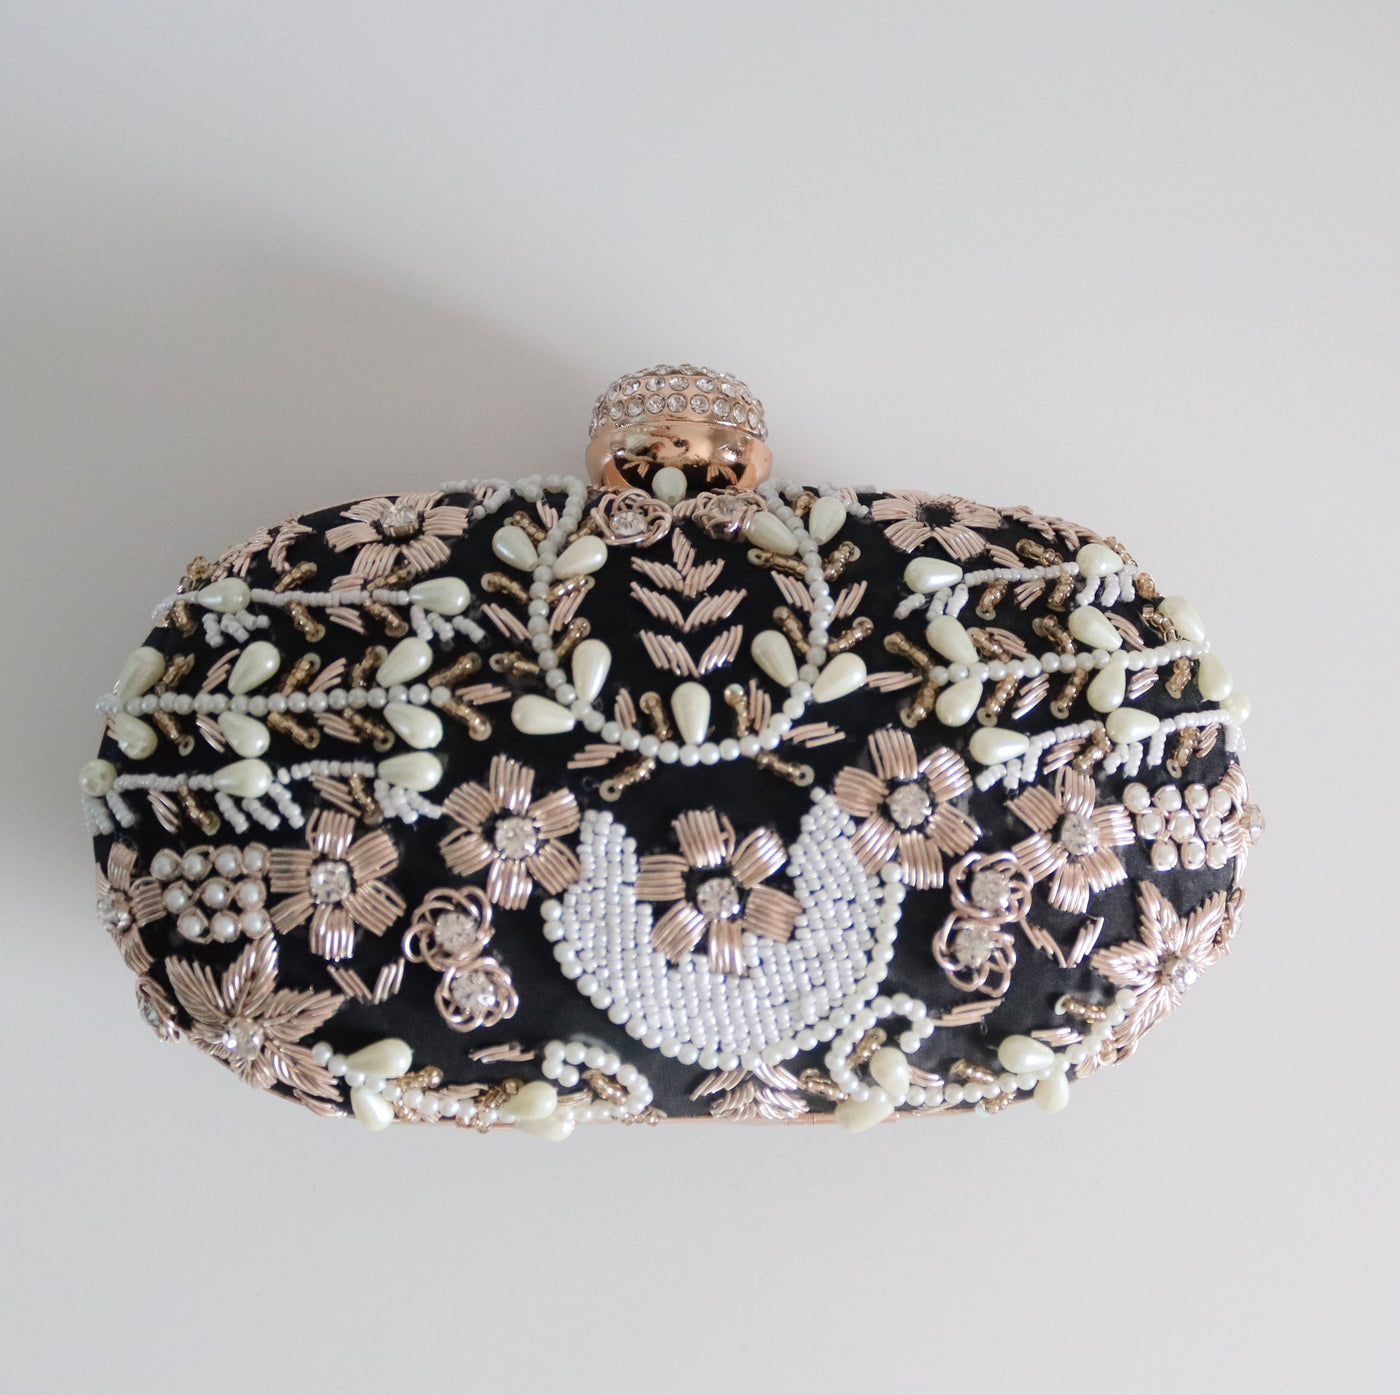 Rameesha Embellished Clutch Bag ~ defective